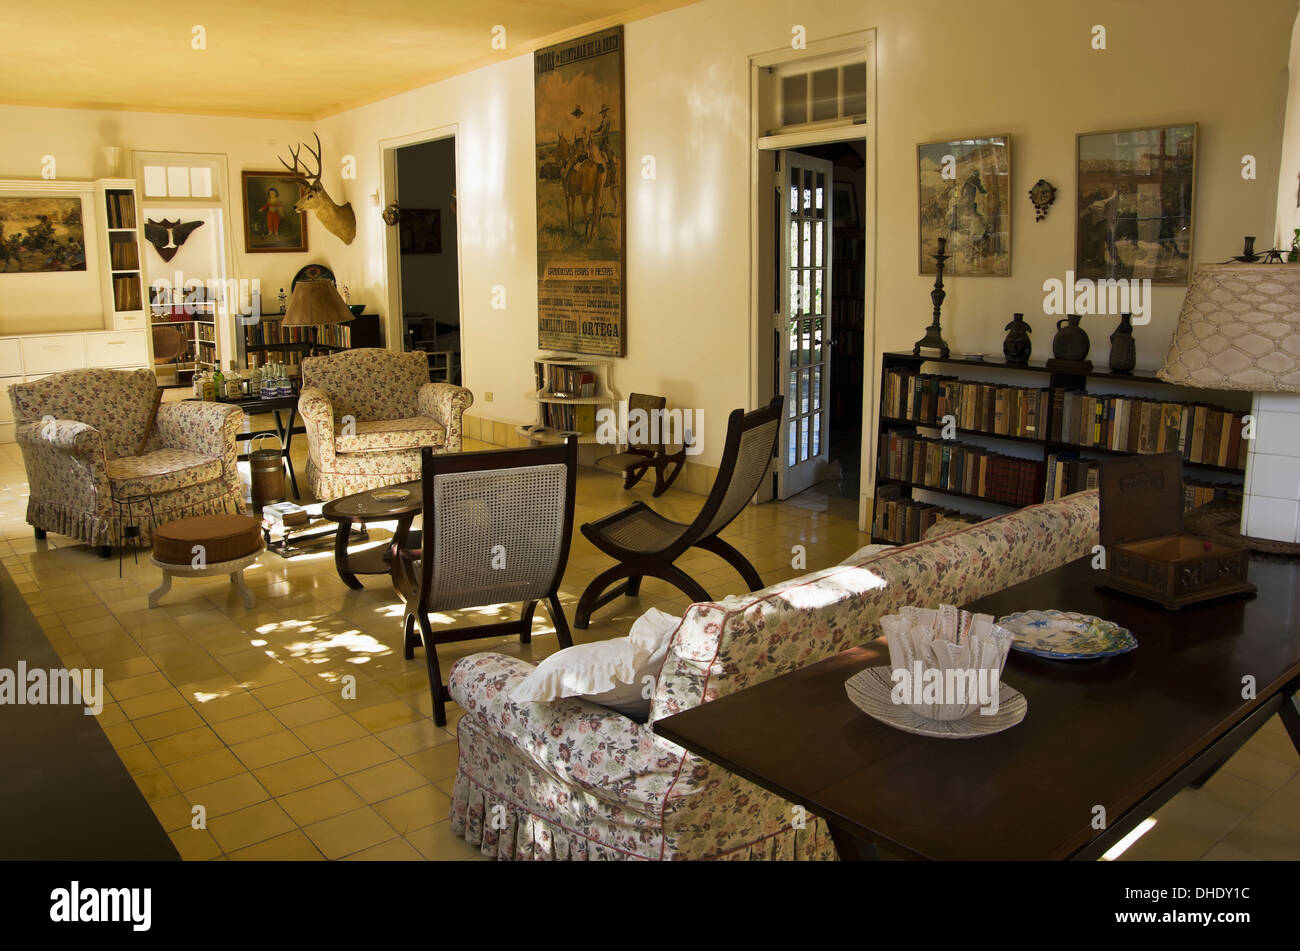 Hemmingway's House, Looking Into Living Room With Furniture, Books And Mounted Mule Deer Head; Alamar, Havana, Artemisa, Cuba Stock Photo